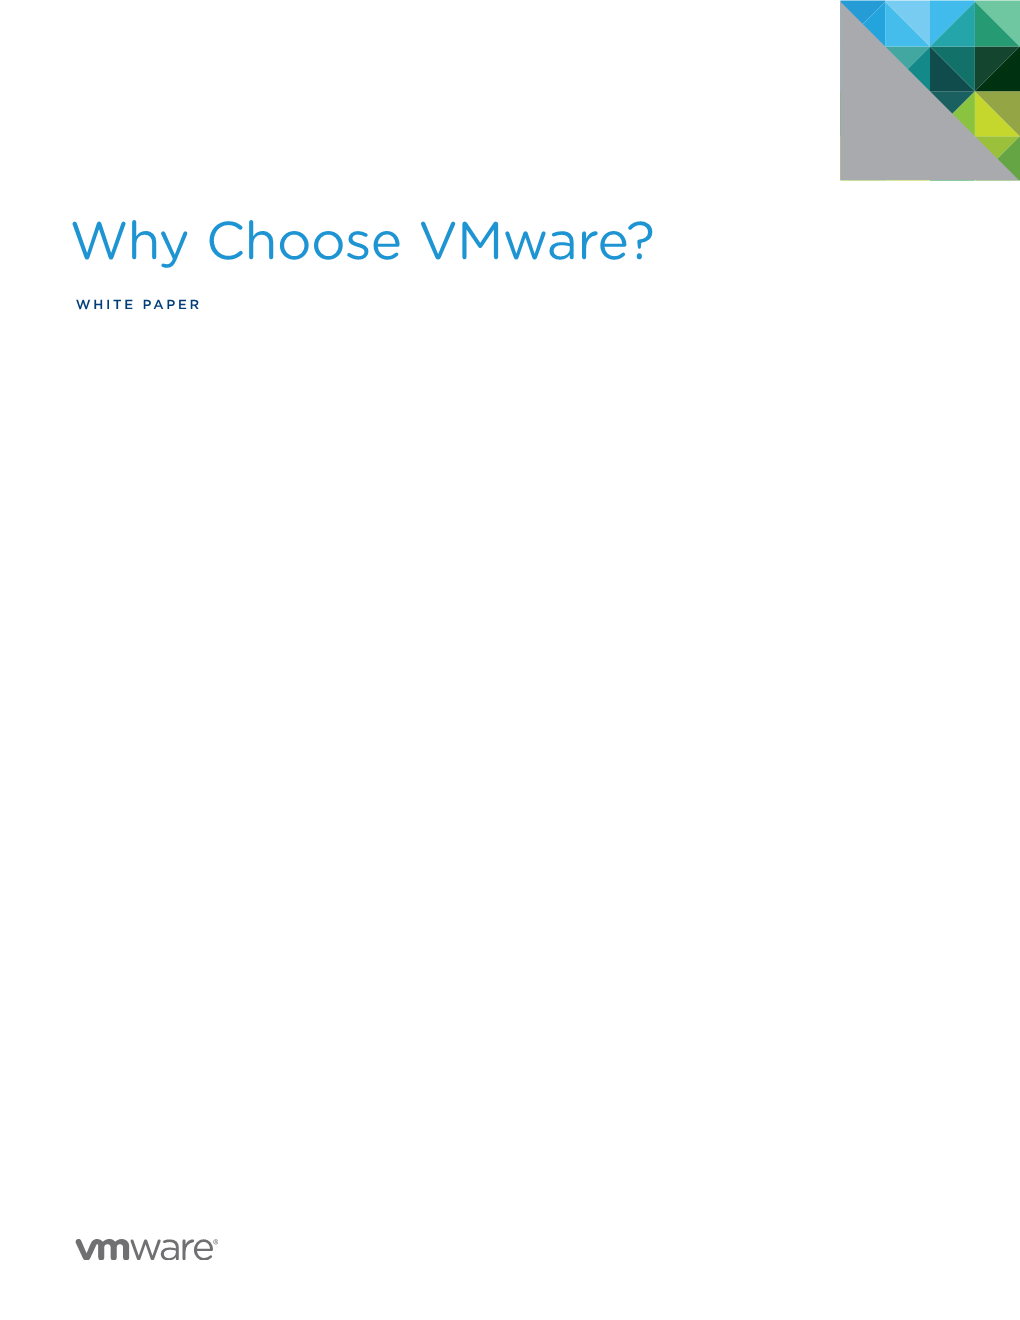 Why Choose Vmware – Best in Virtualization